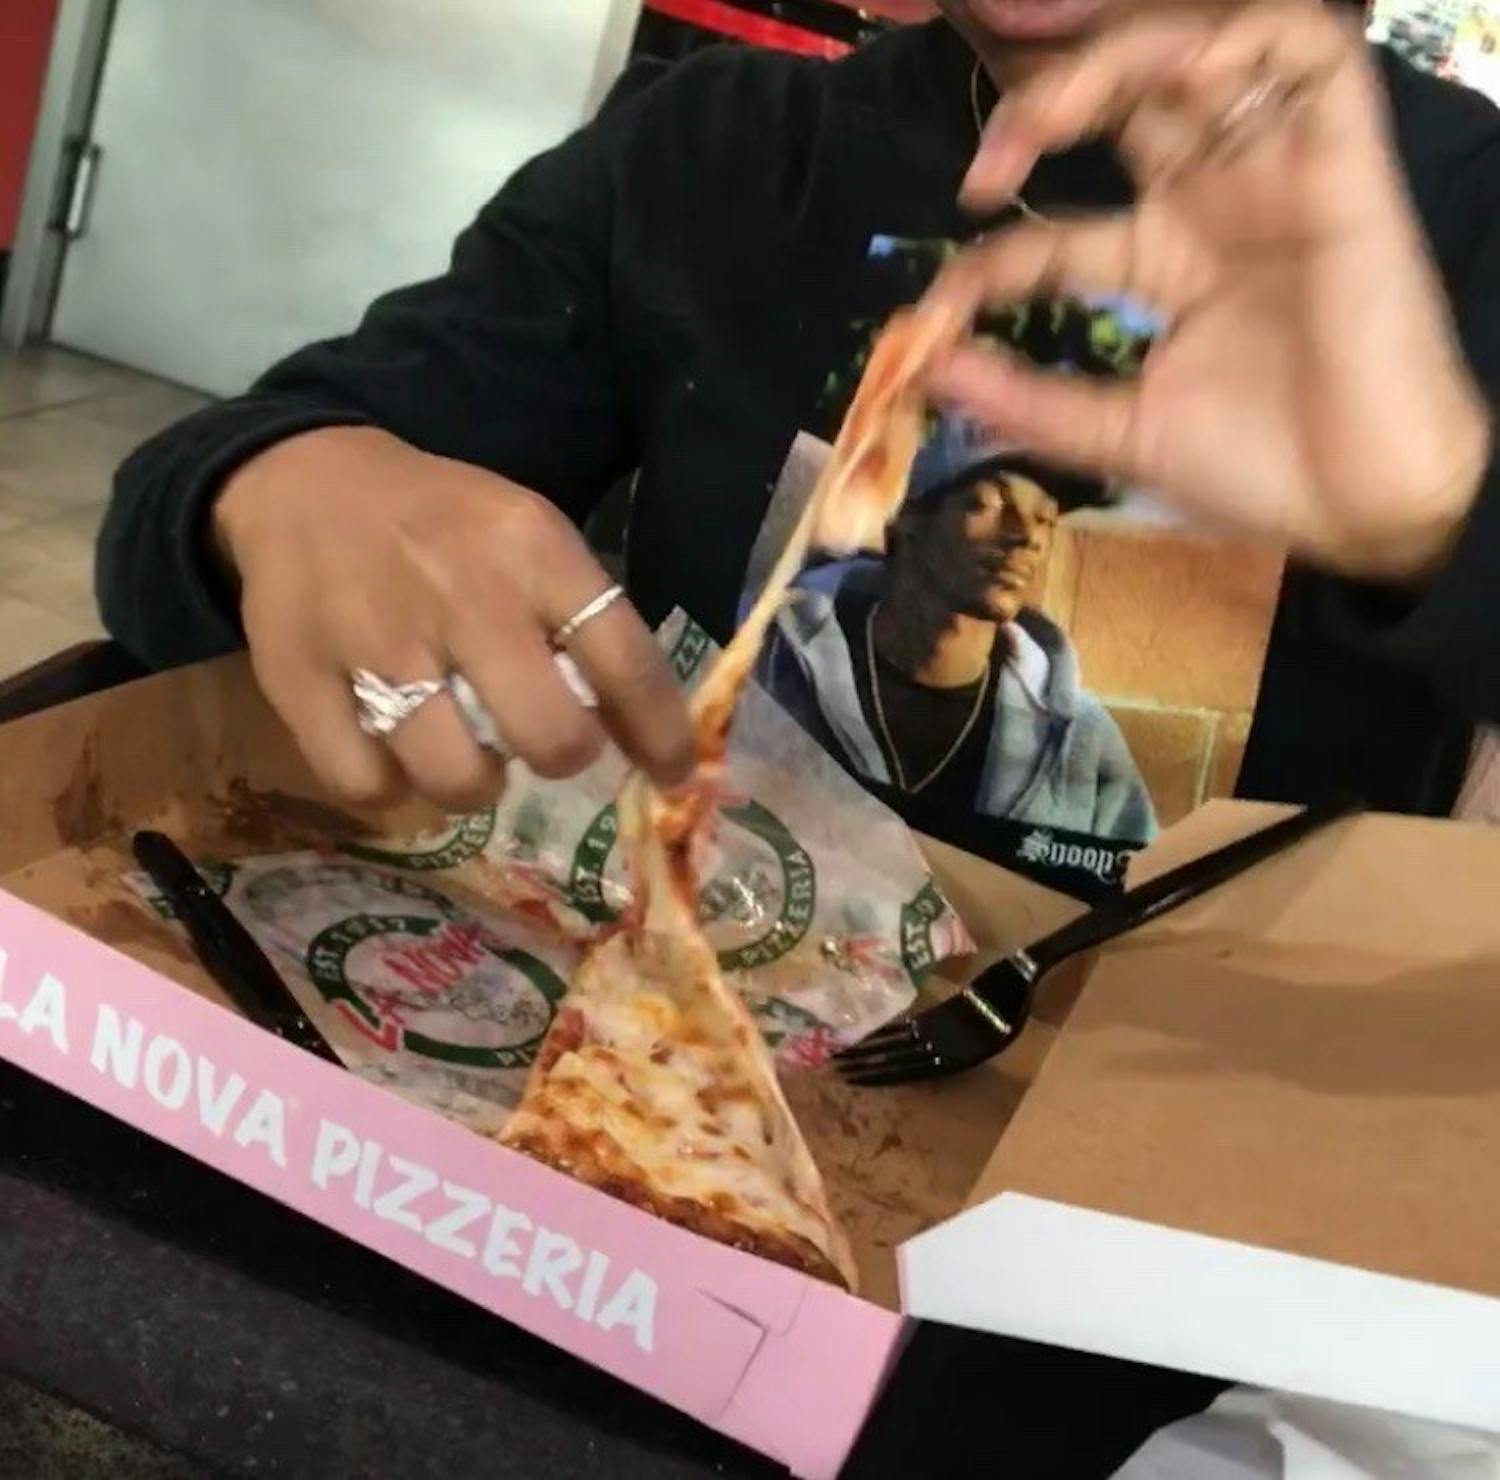 La Nova's plain cheese pizza inside of their aesthetically pleasing pink box.